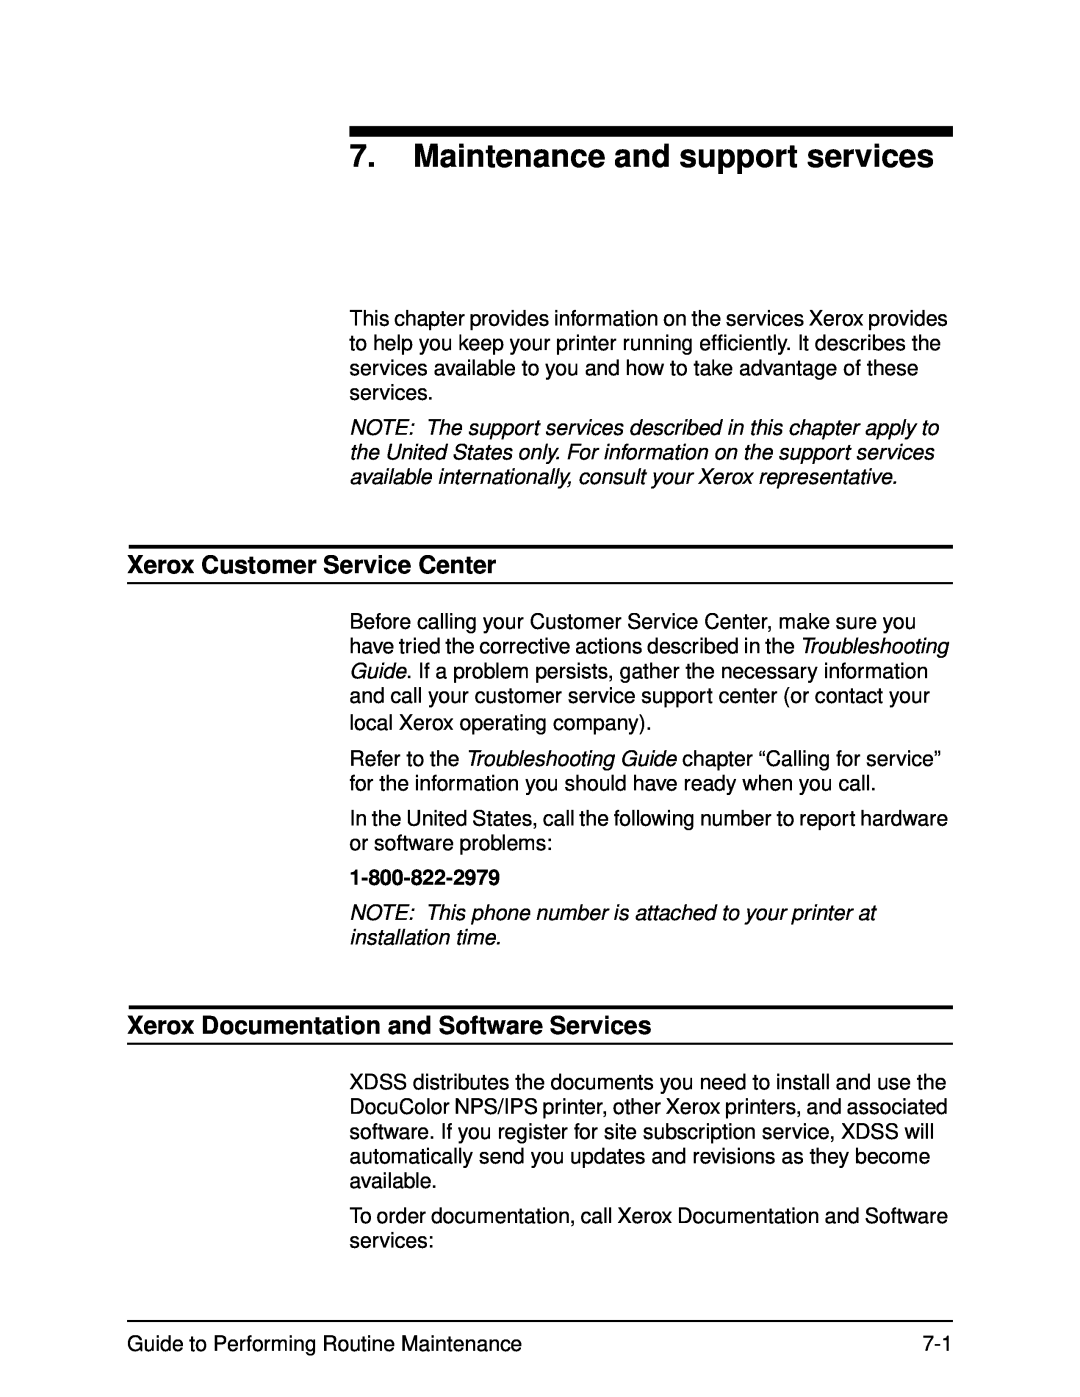 Xerox DocuPrint 96 manual Maintenance and support services, Xerox Customer Service Center 